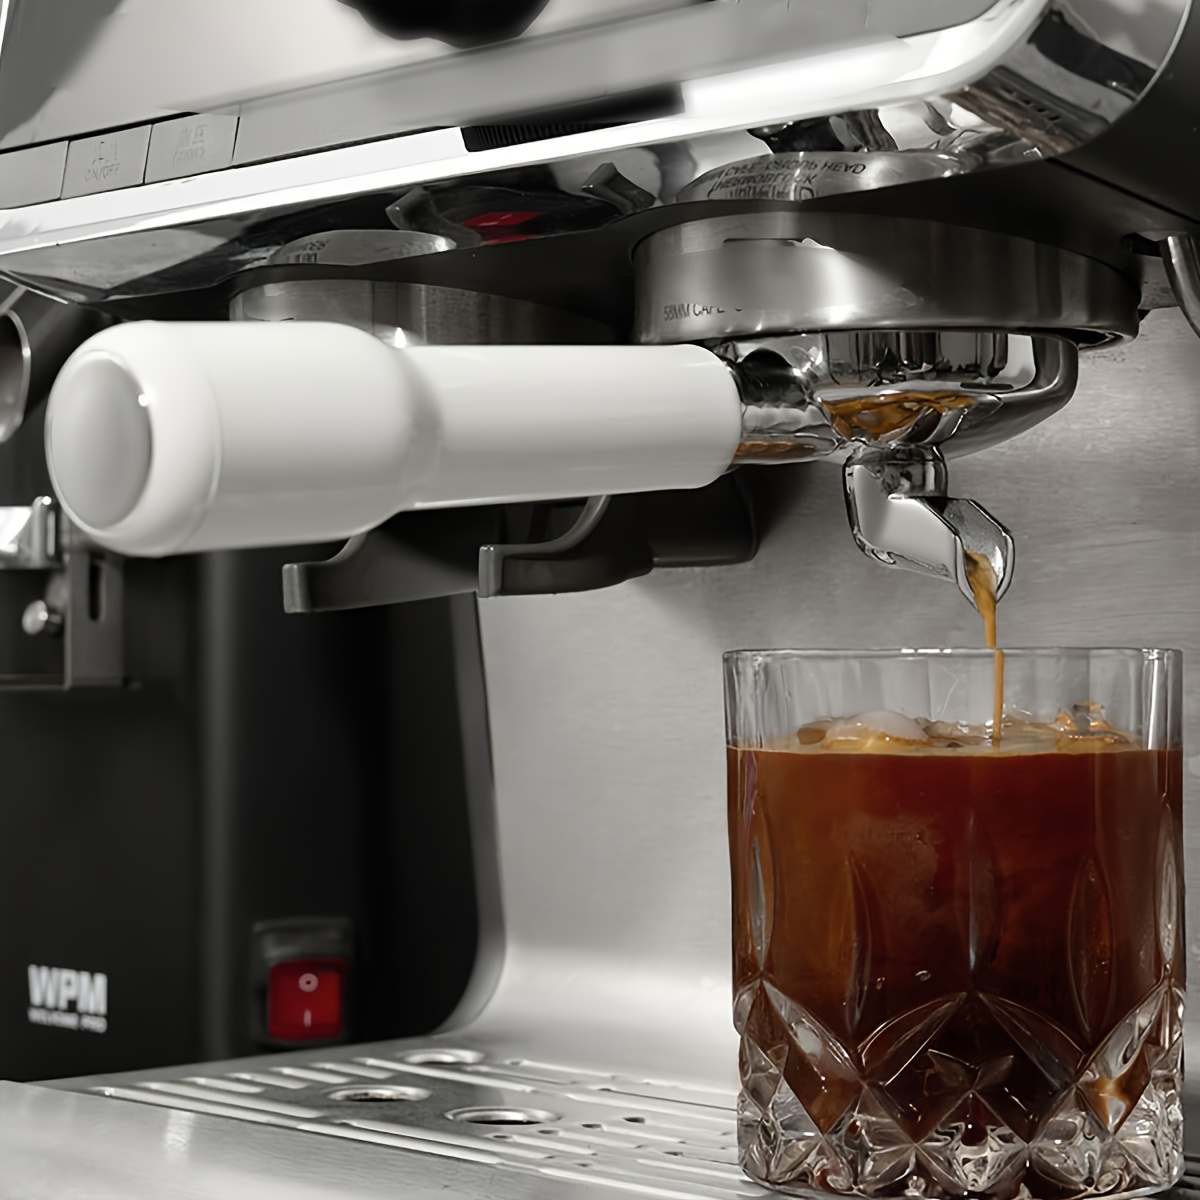  Cafetera térmica de 6 tazas: cafetera de goteo con temporizador  programable, control de fuerza de preparación, cafetera de acero inoxidable  y filtro permanente, sistema antigoteo inteligente, máquina de café  automática para